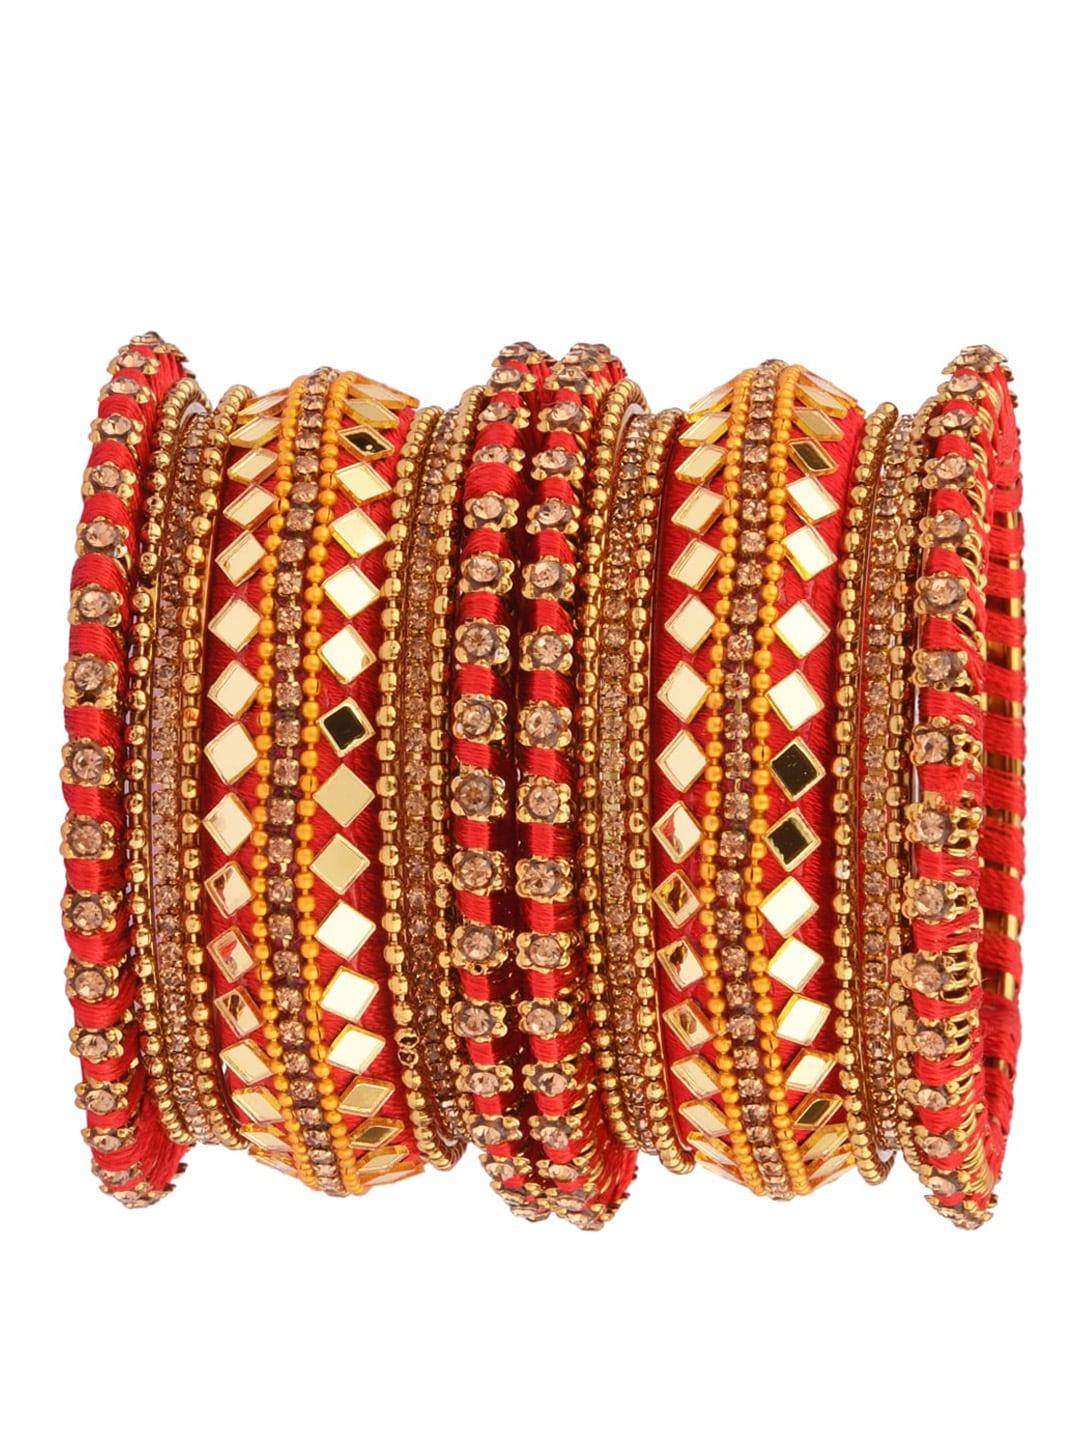 femmibella set of 18 gold-plated red stone-studded chuda bangles